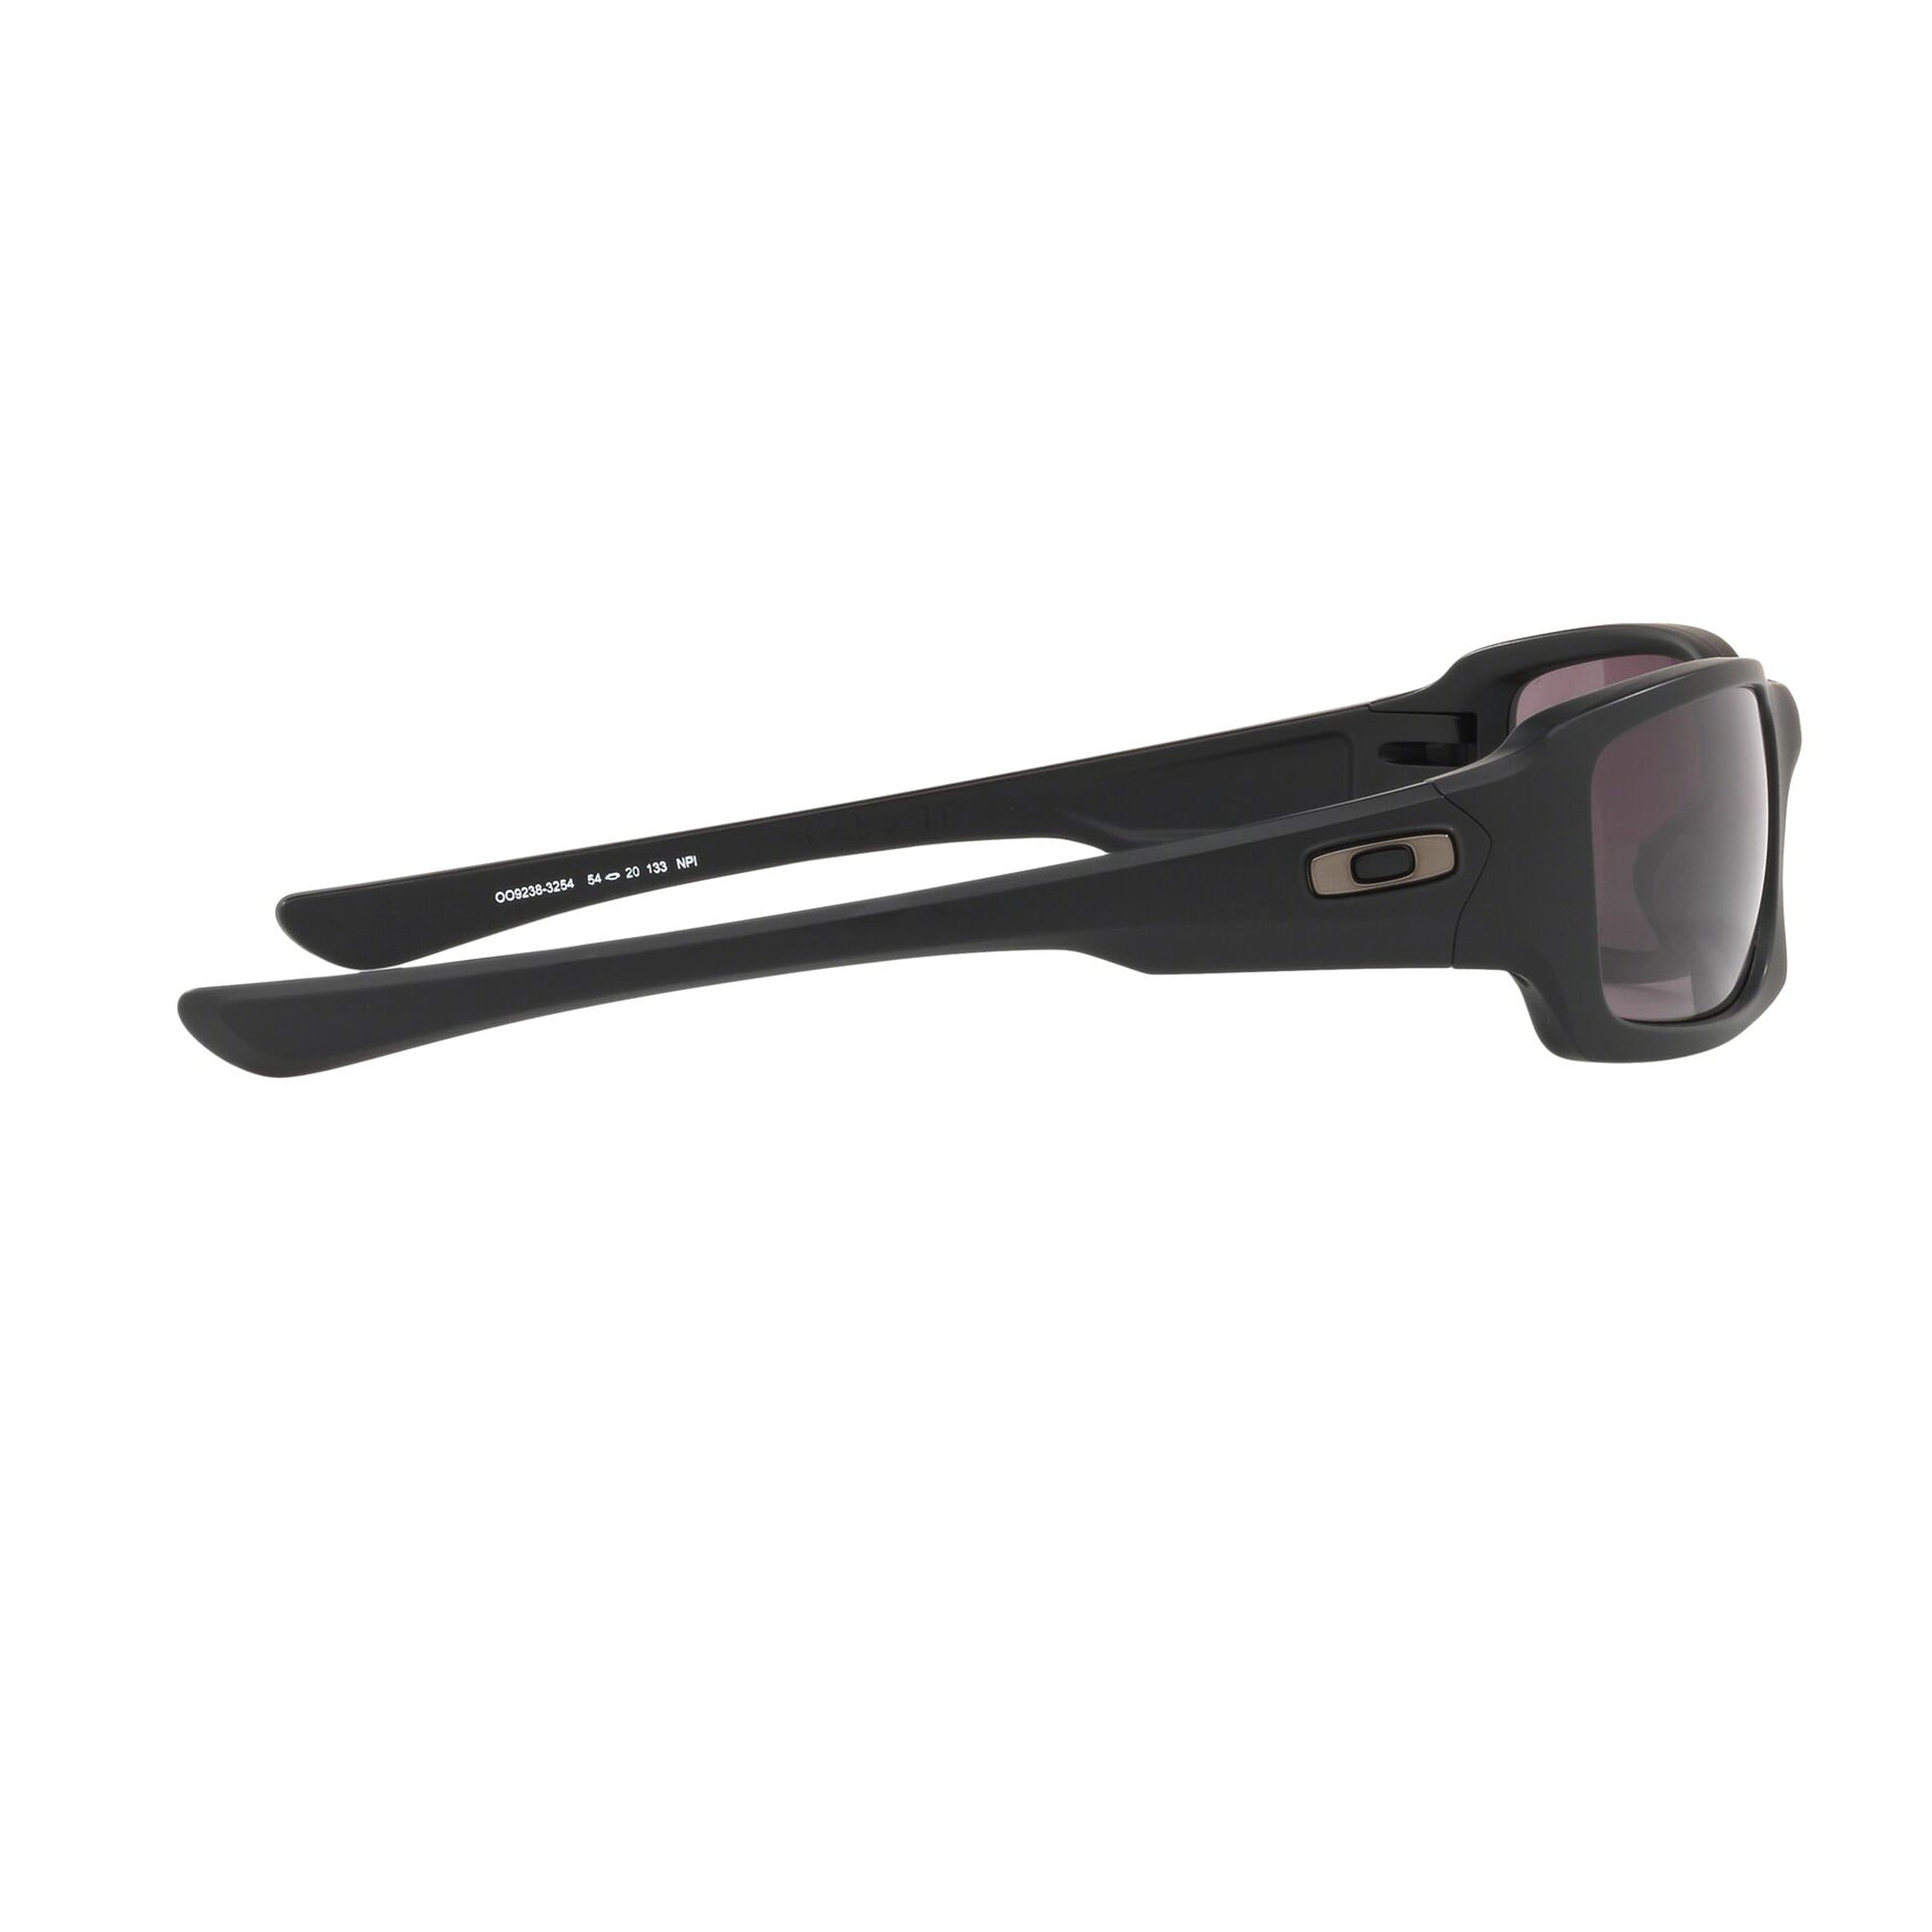 Oakley Fives Squared Sunglasses - Matte Black / Prizm Grey